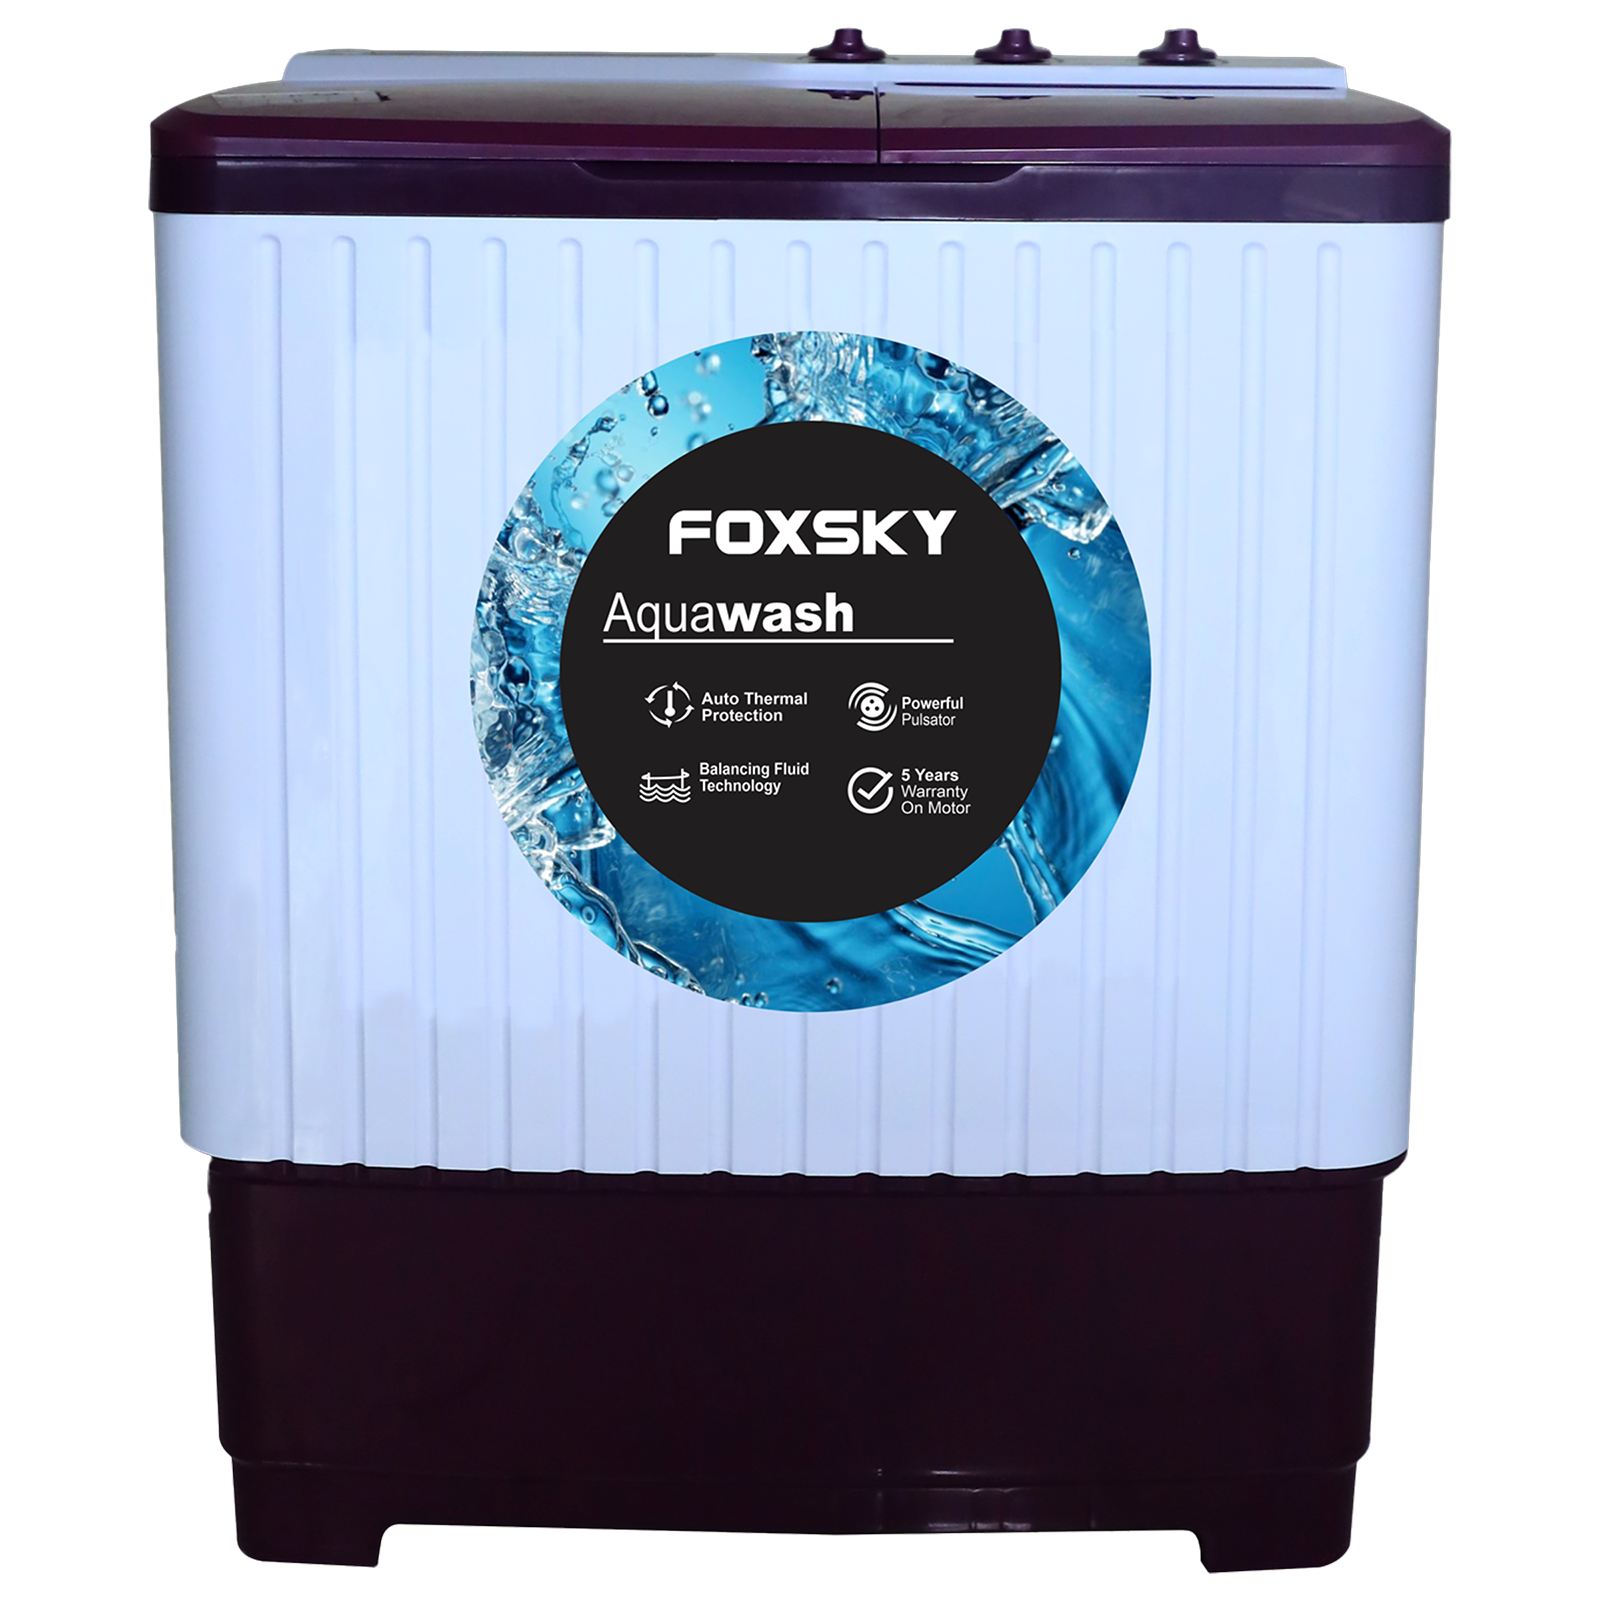 FOXSKY 7 kg Semi-Automatic Top Load Washing Machine with Magic Filter (Aqua Wash, Maroon)